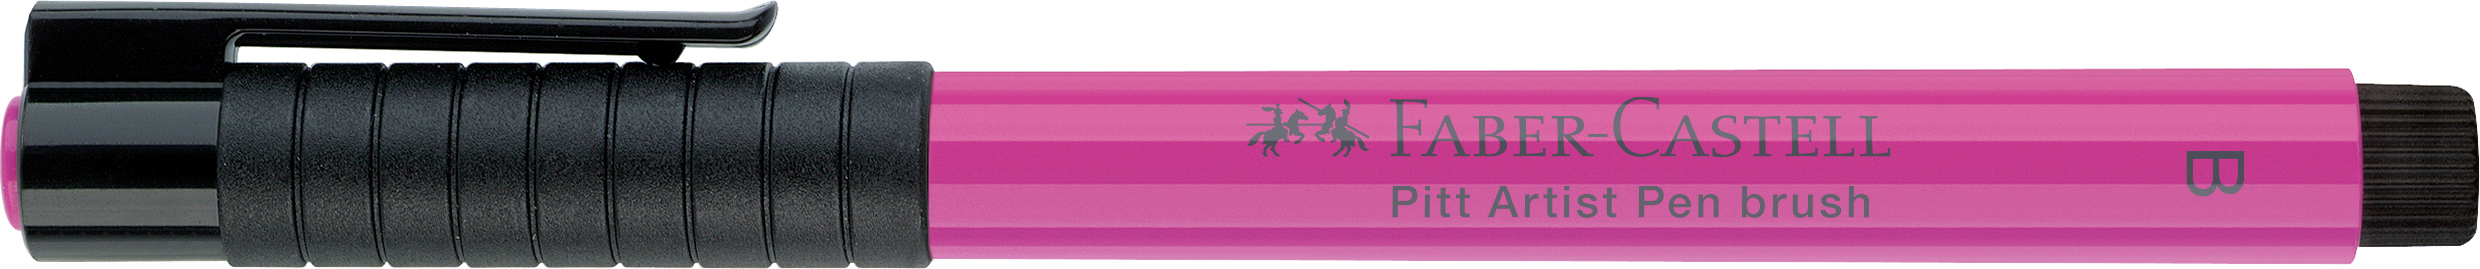 FABER-CASTELL Pitt Artist Pen Brush 2.5mm 167425 middle purple pink